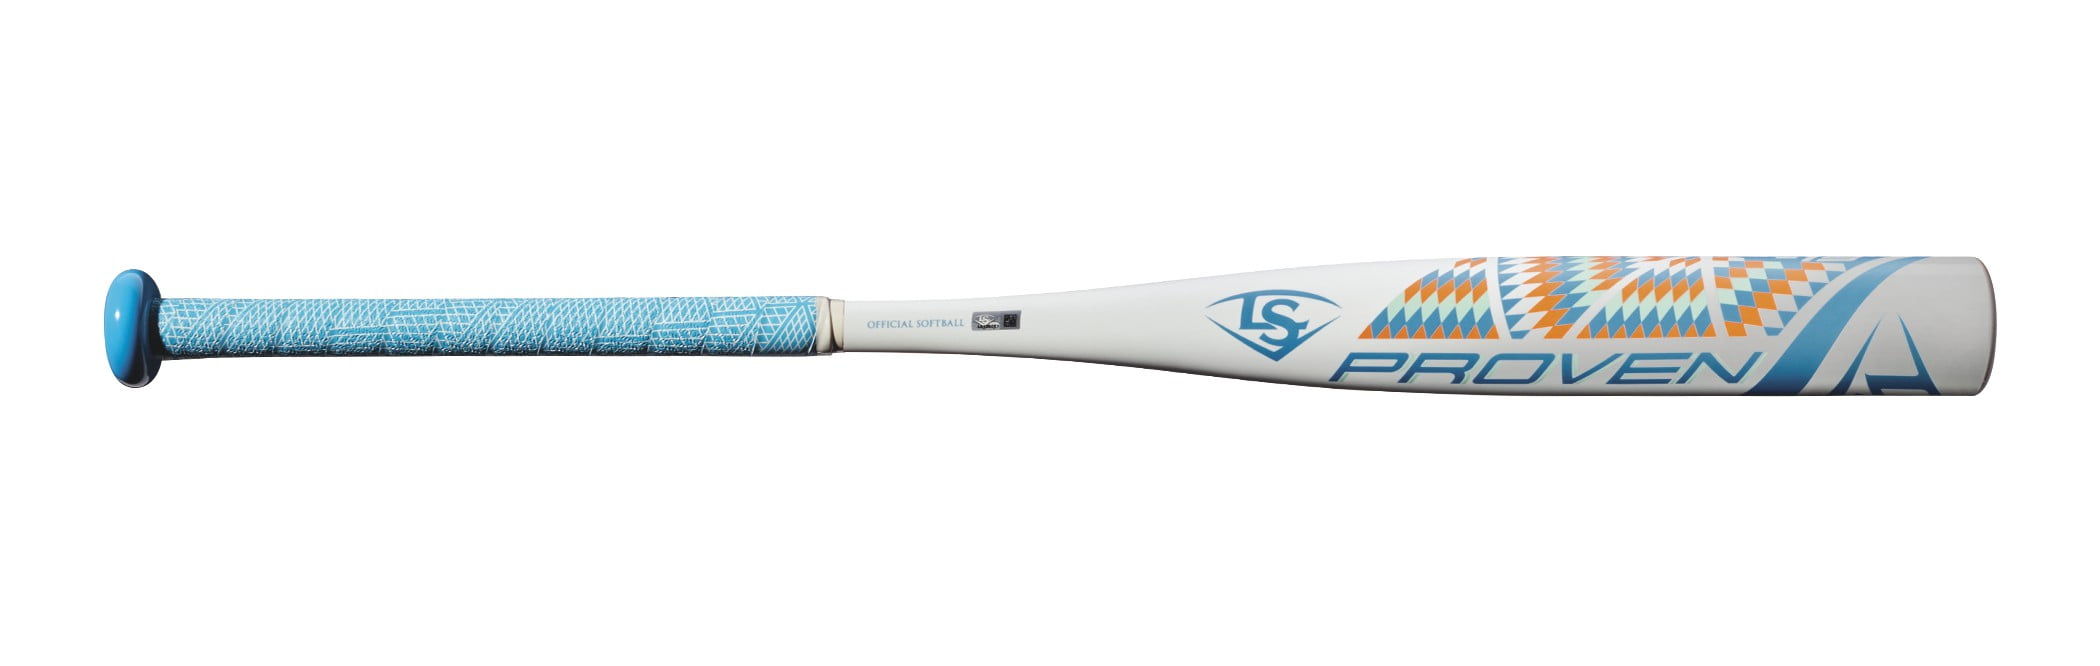 Louisville Slugger 2020 Proven (-13) Fastpitch Softball Bat